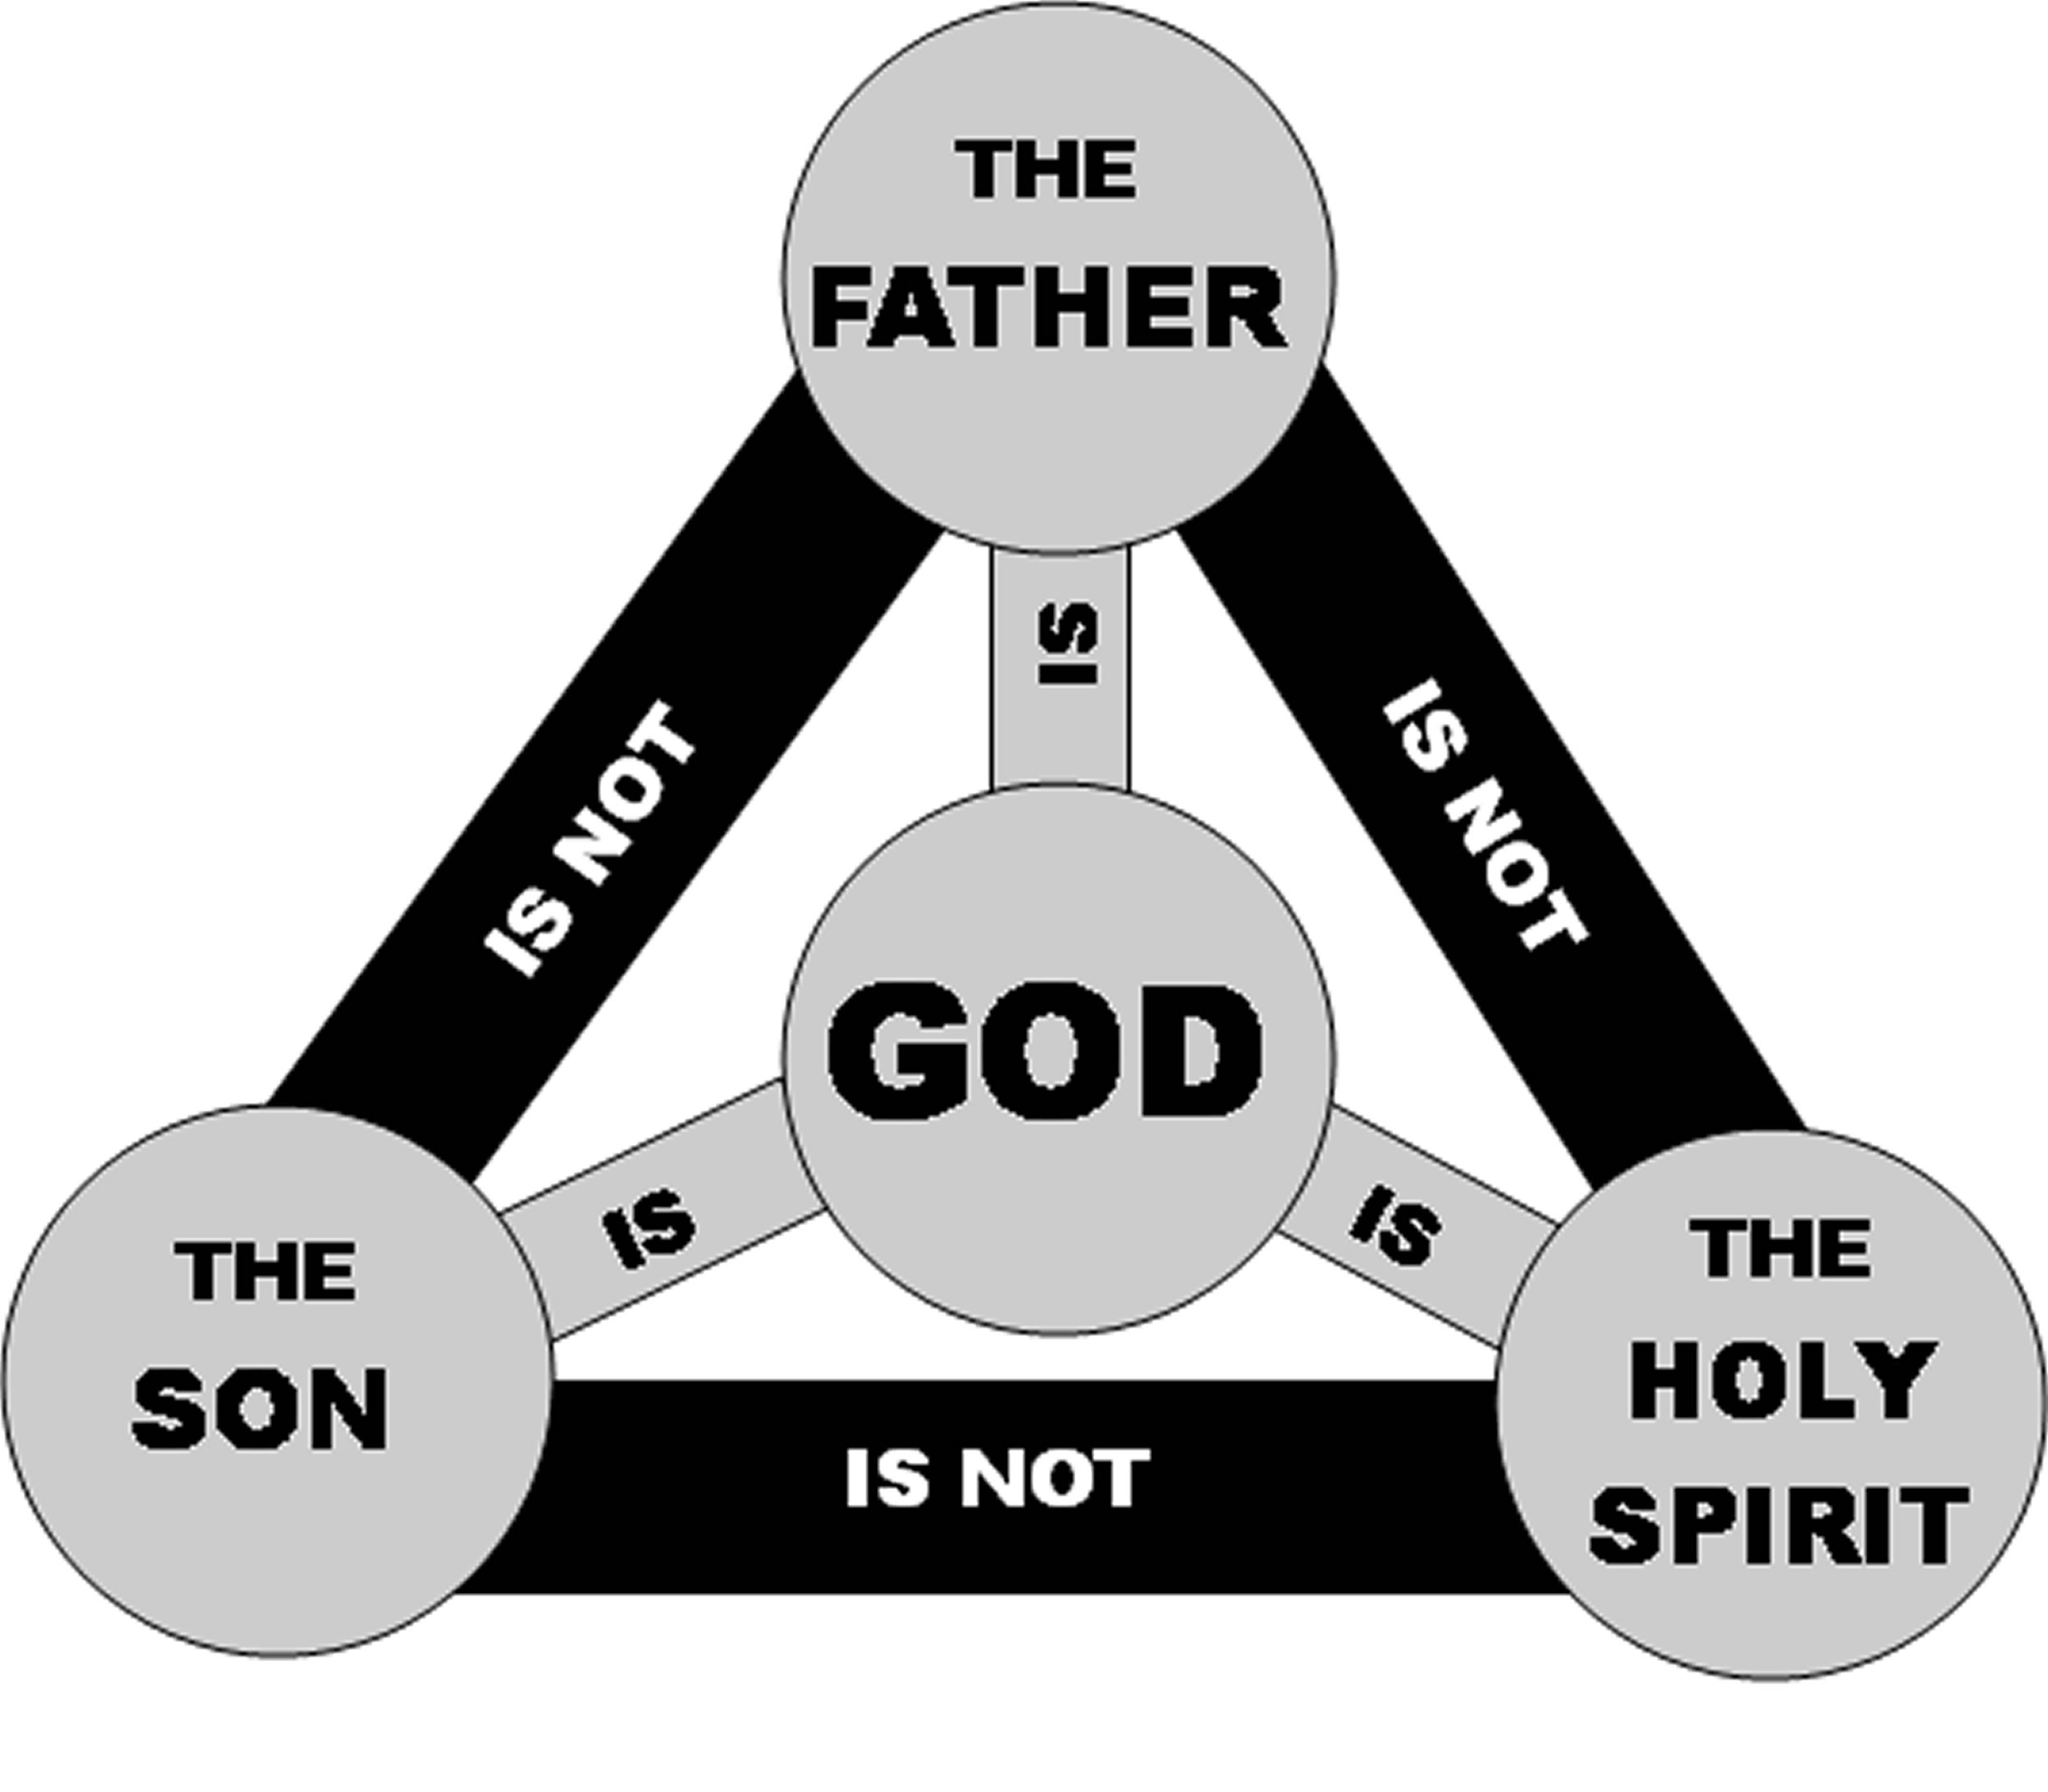 Переведи gods. Бог Святой дух. The Trinity Doctrine. Father son and Holy Spirit. Треугольник отец сын Святой дух.